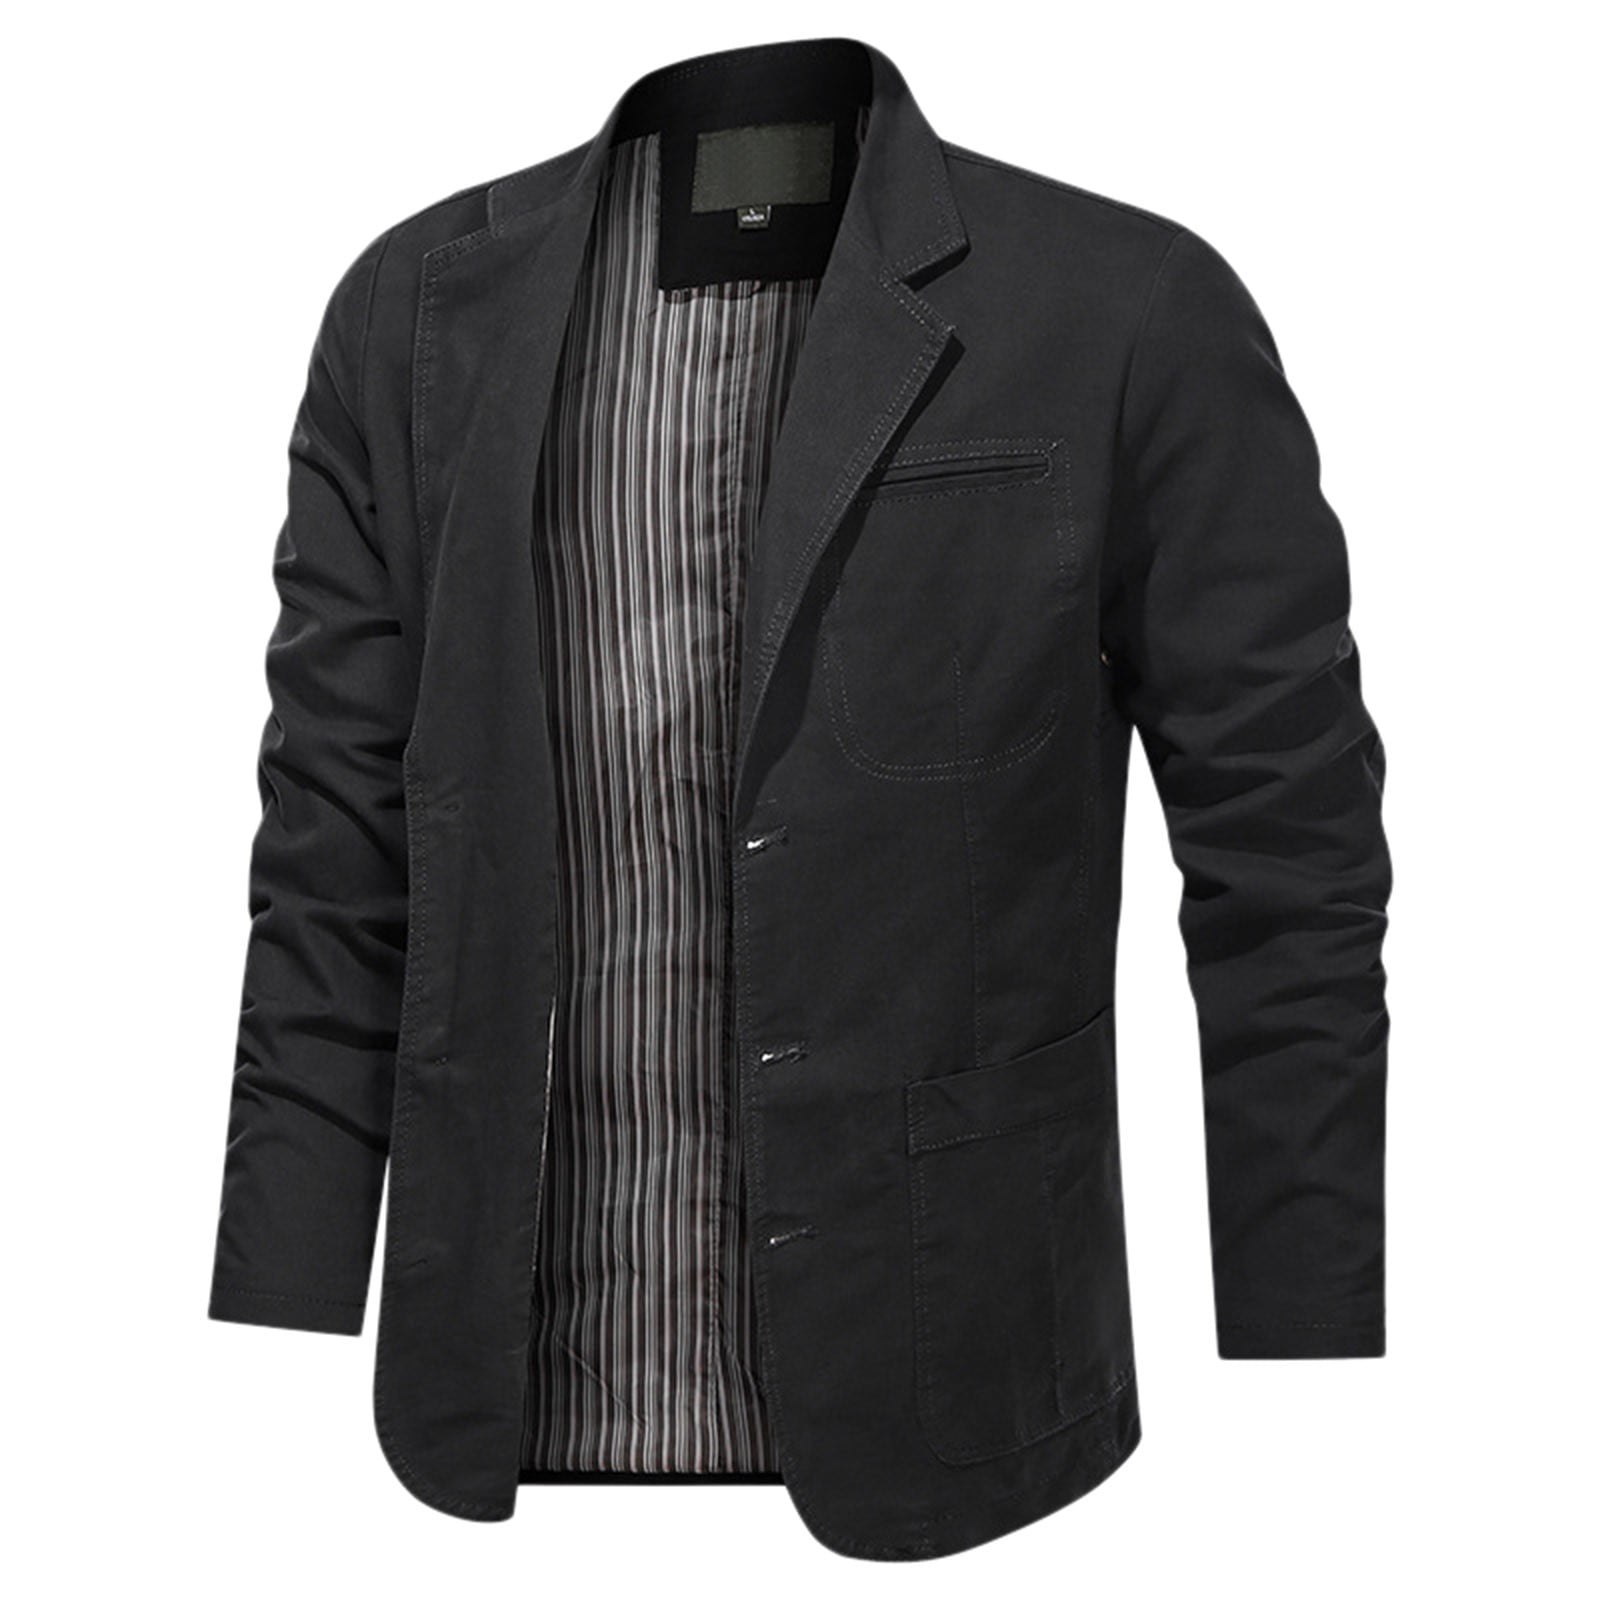 Winter Black Jackets For Men Mens Fashion Simple Camouflage Pocket Cardigan Suit Botton Sweater Jacket Polyester f87c8d3b 70e9 40c0 a5cc ece76966cdbe.710c74c0d7290178234c54b5001dc172